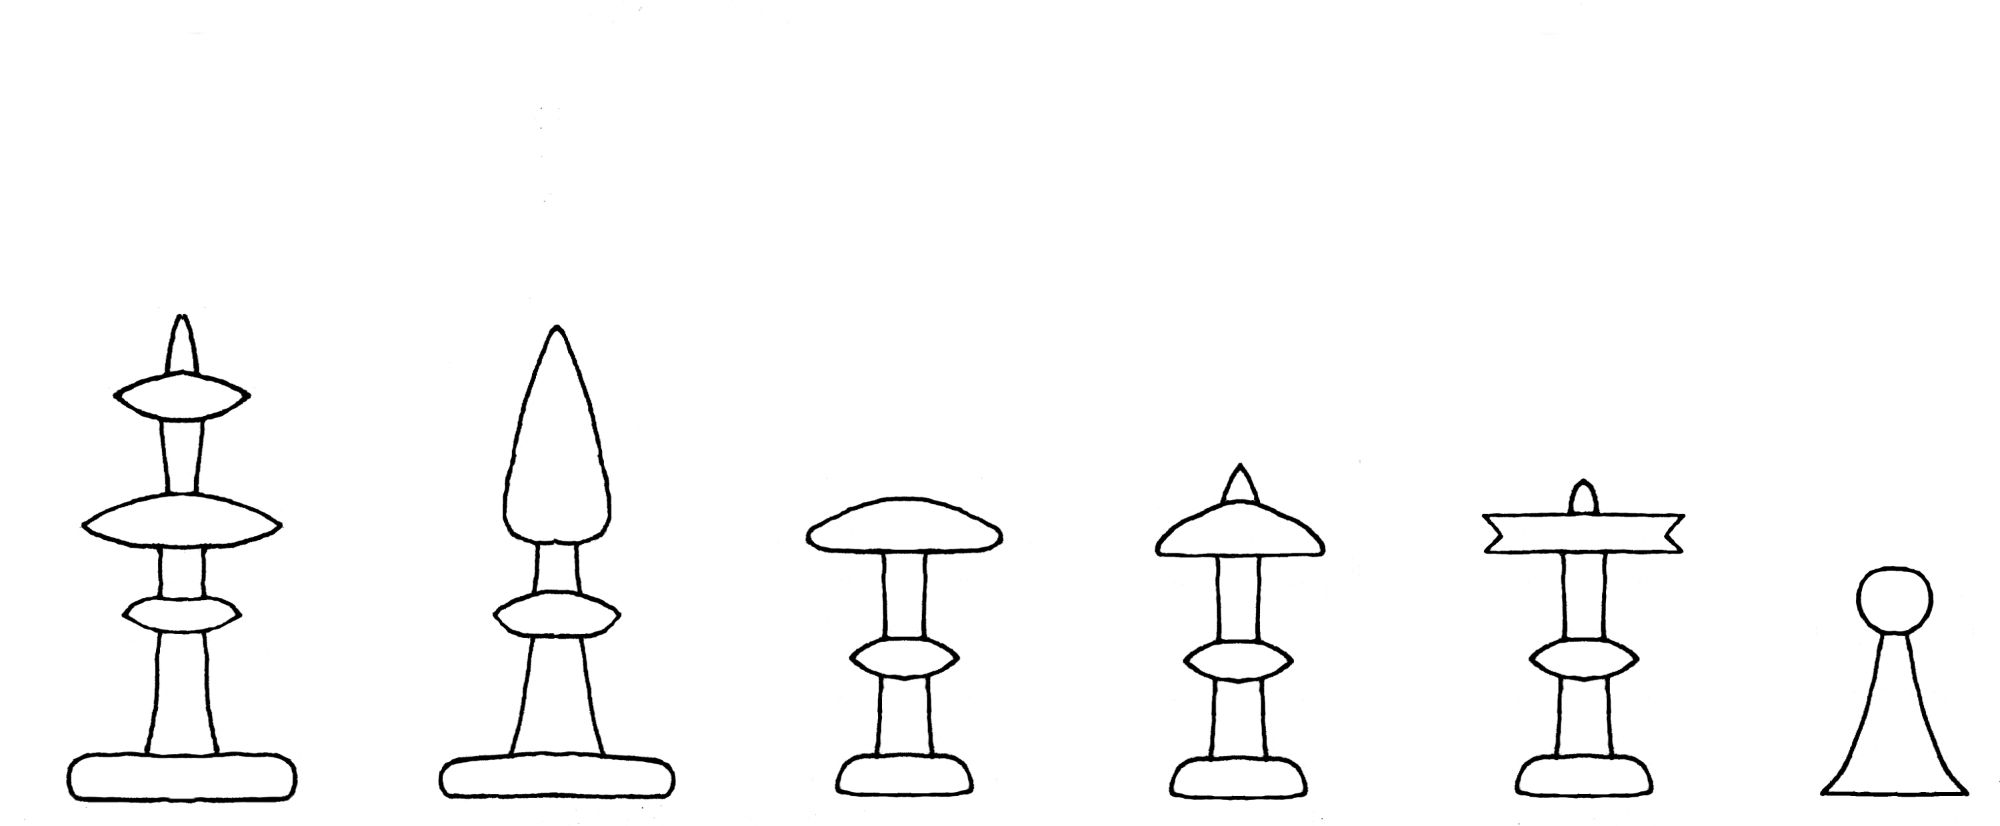 Pacioli chess set interpretive diagram